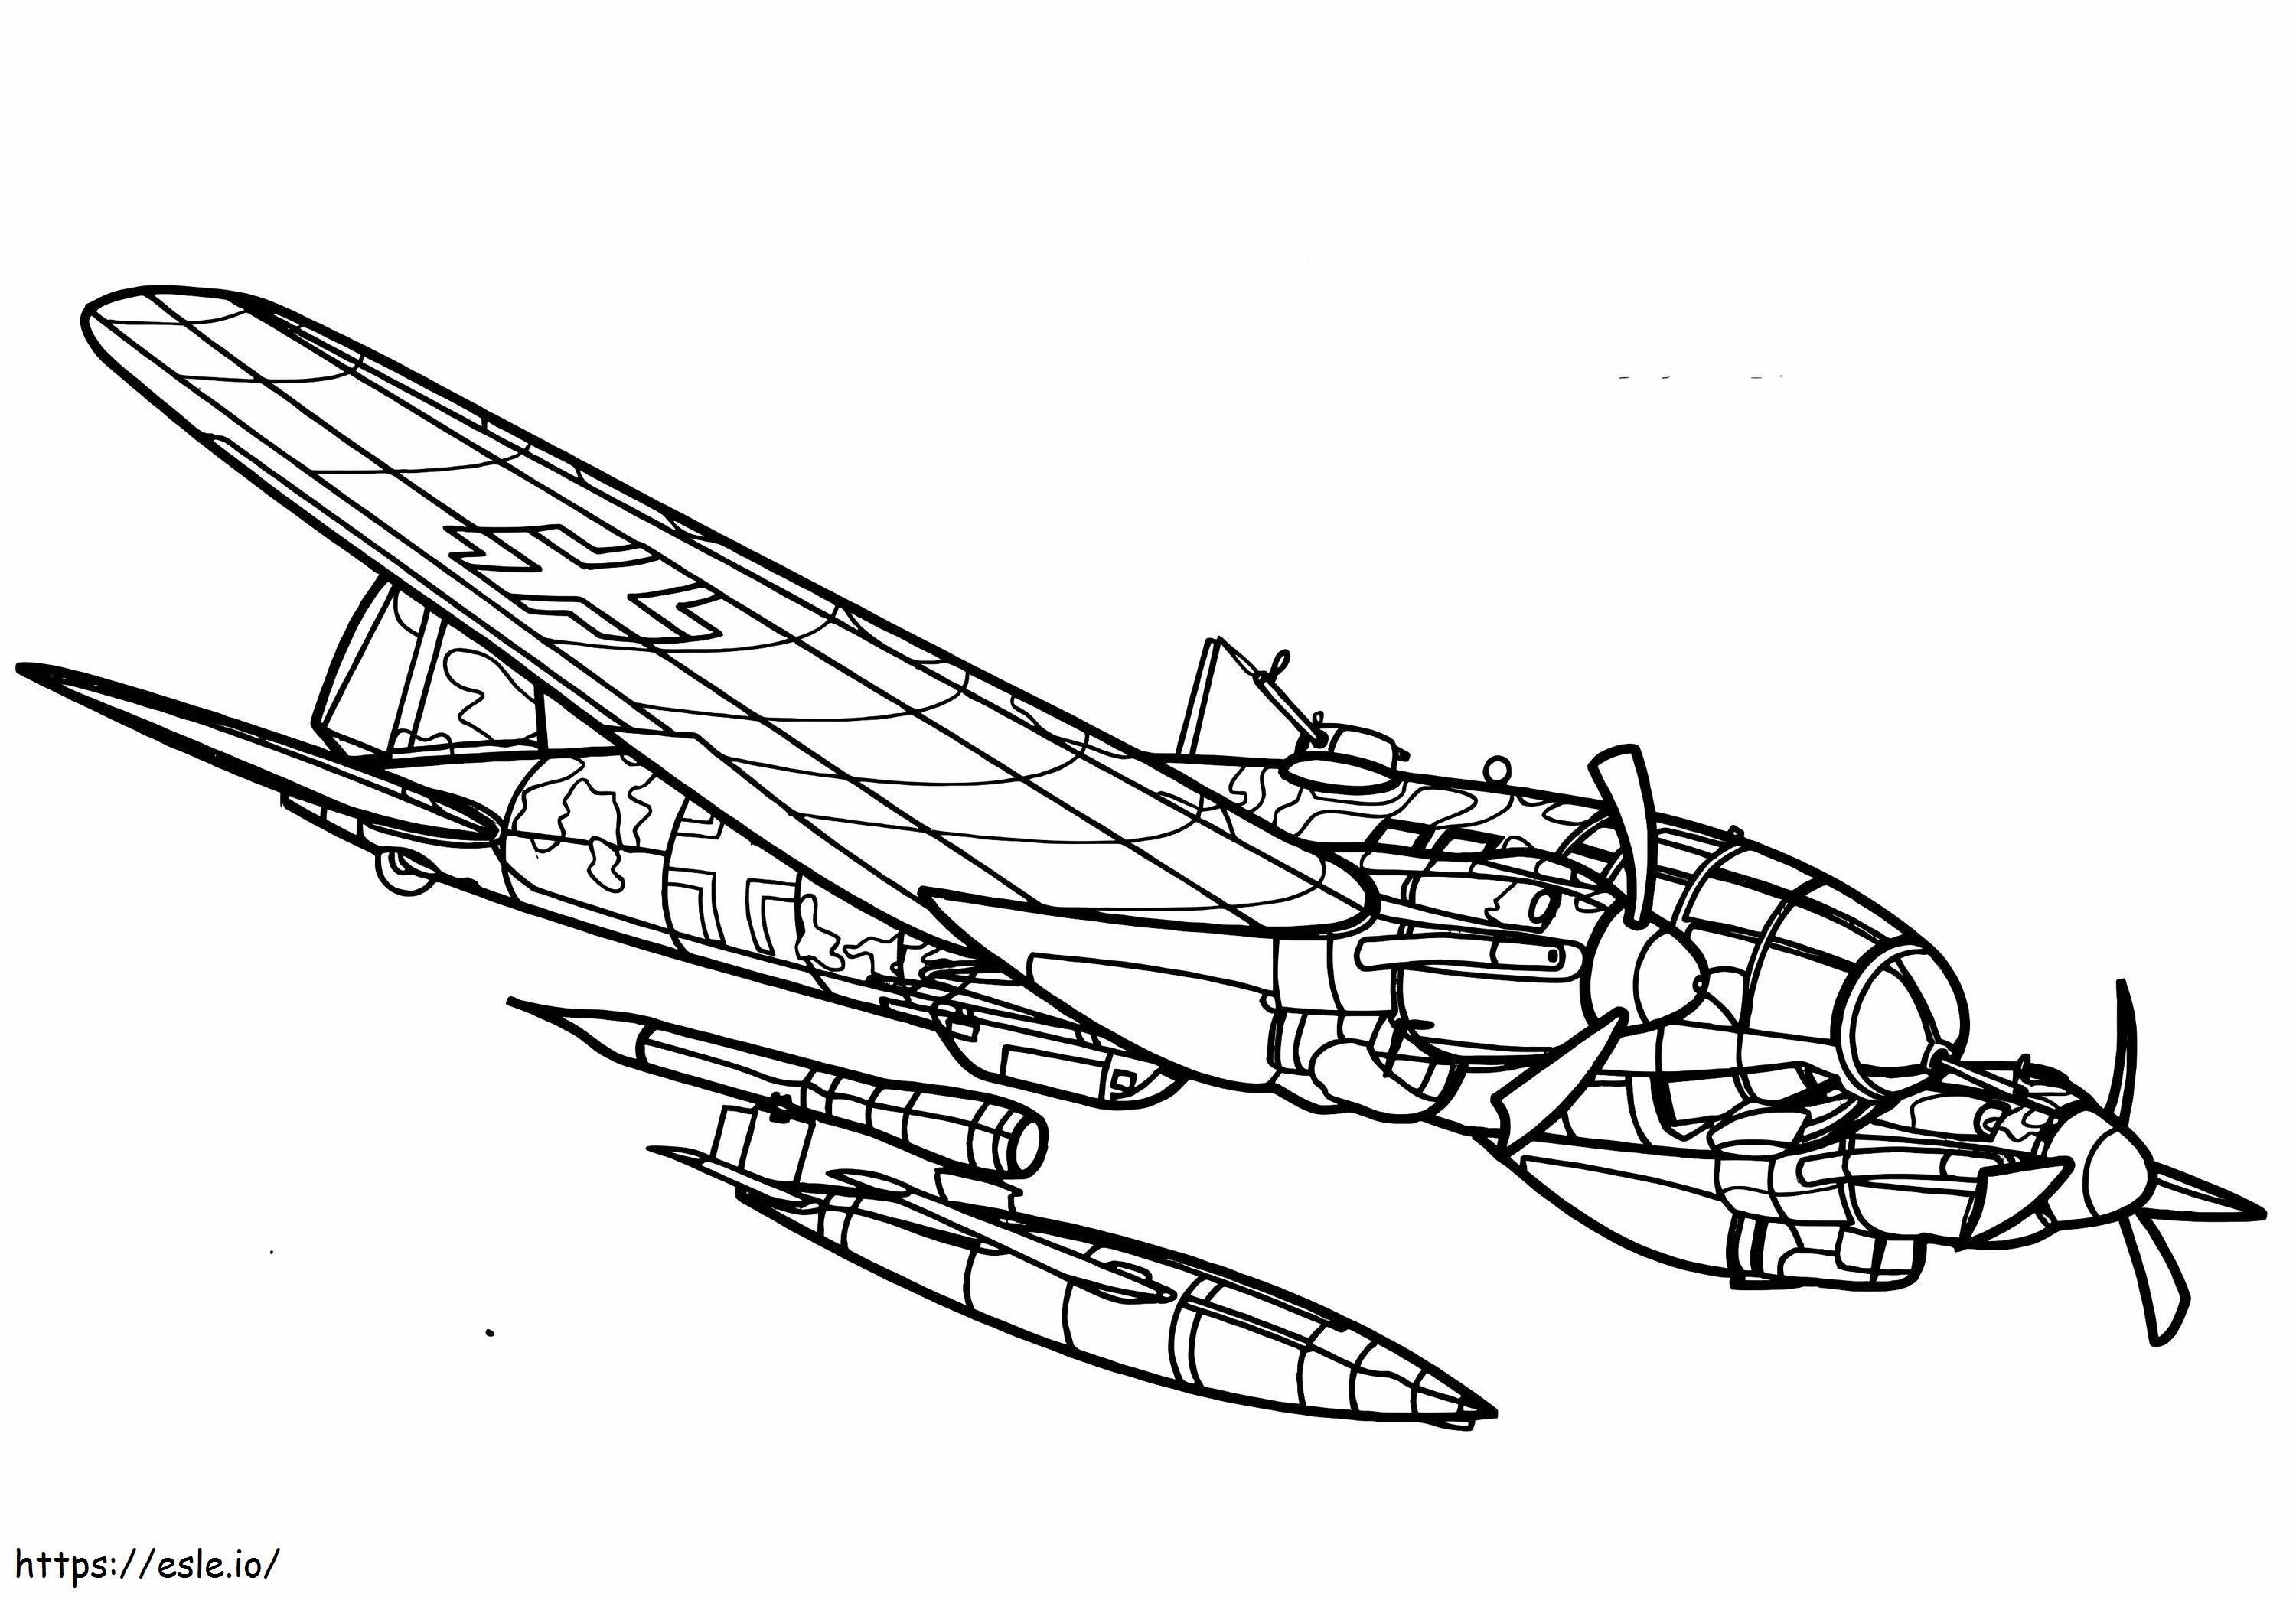 Bombardeiro Heinkel He 111 para colorir